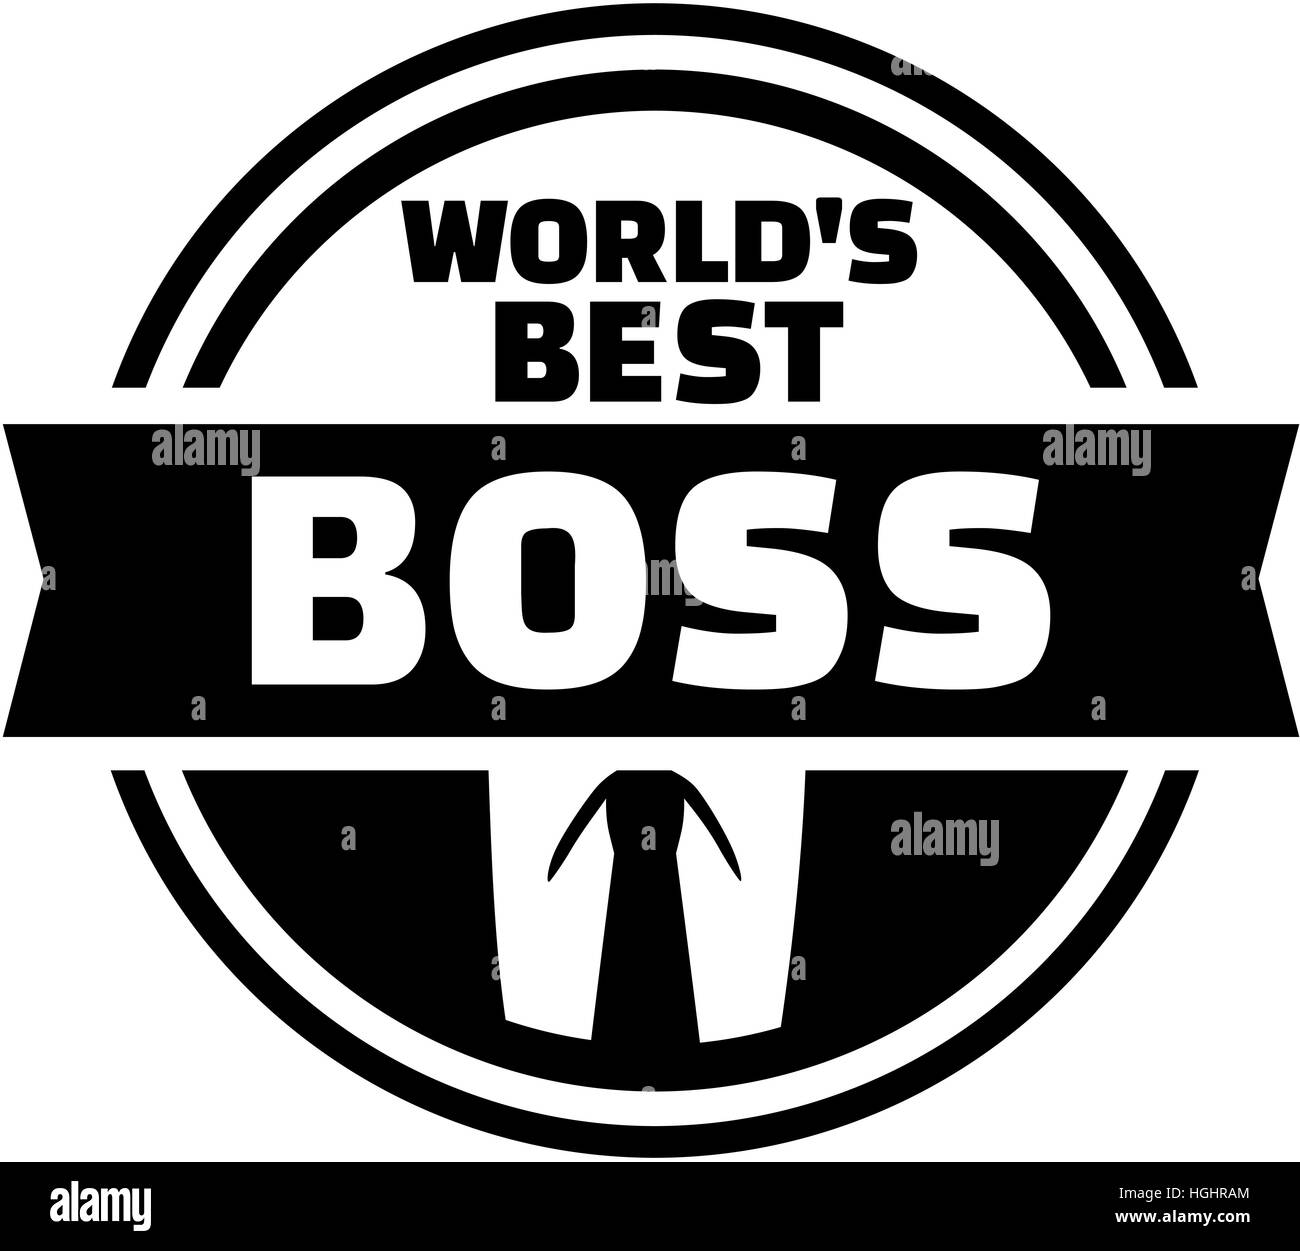 World's best boss Stock Photo - Alamy